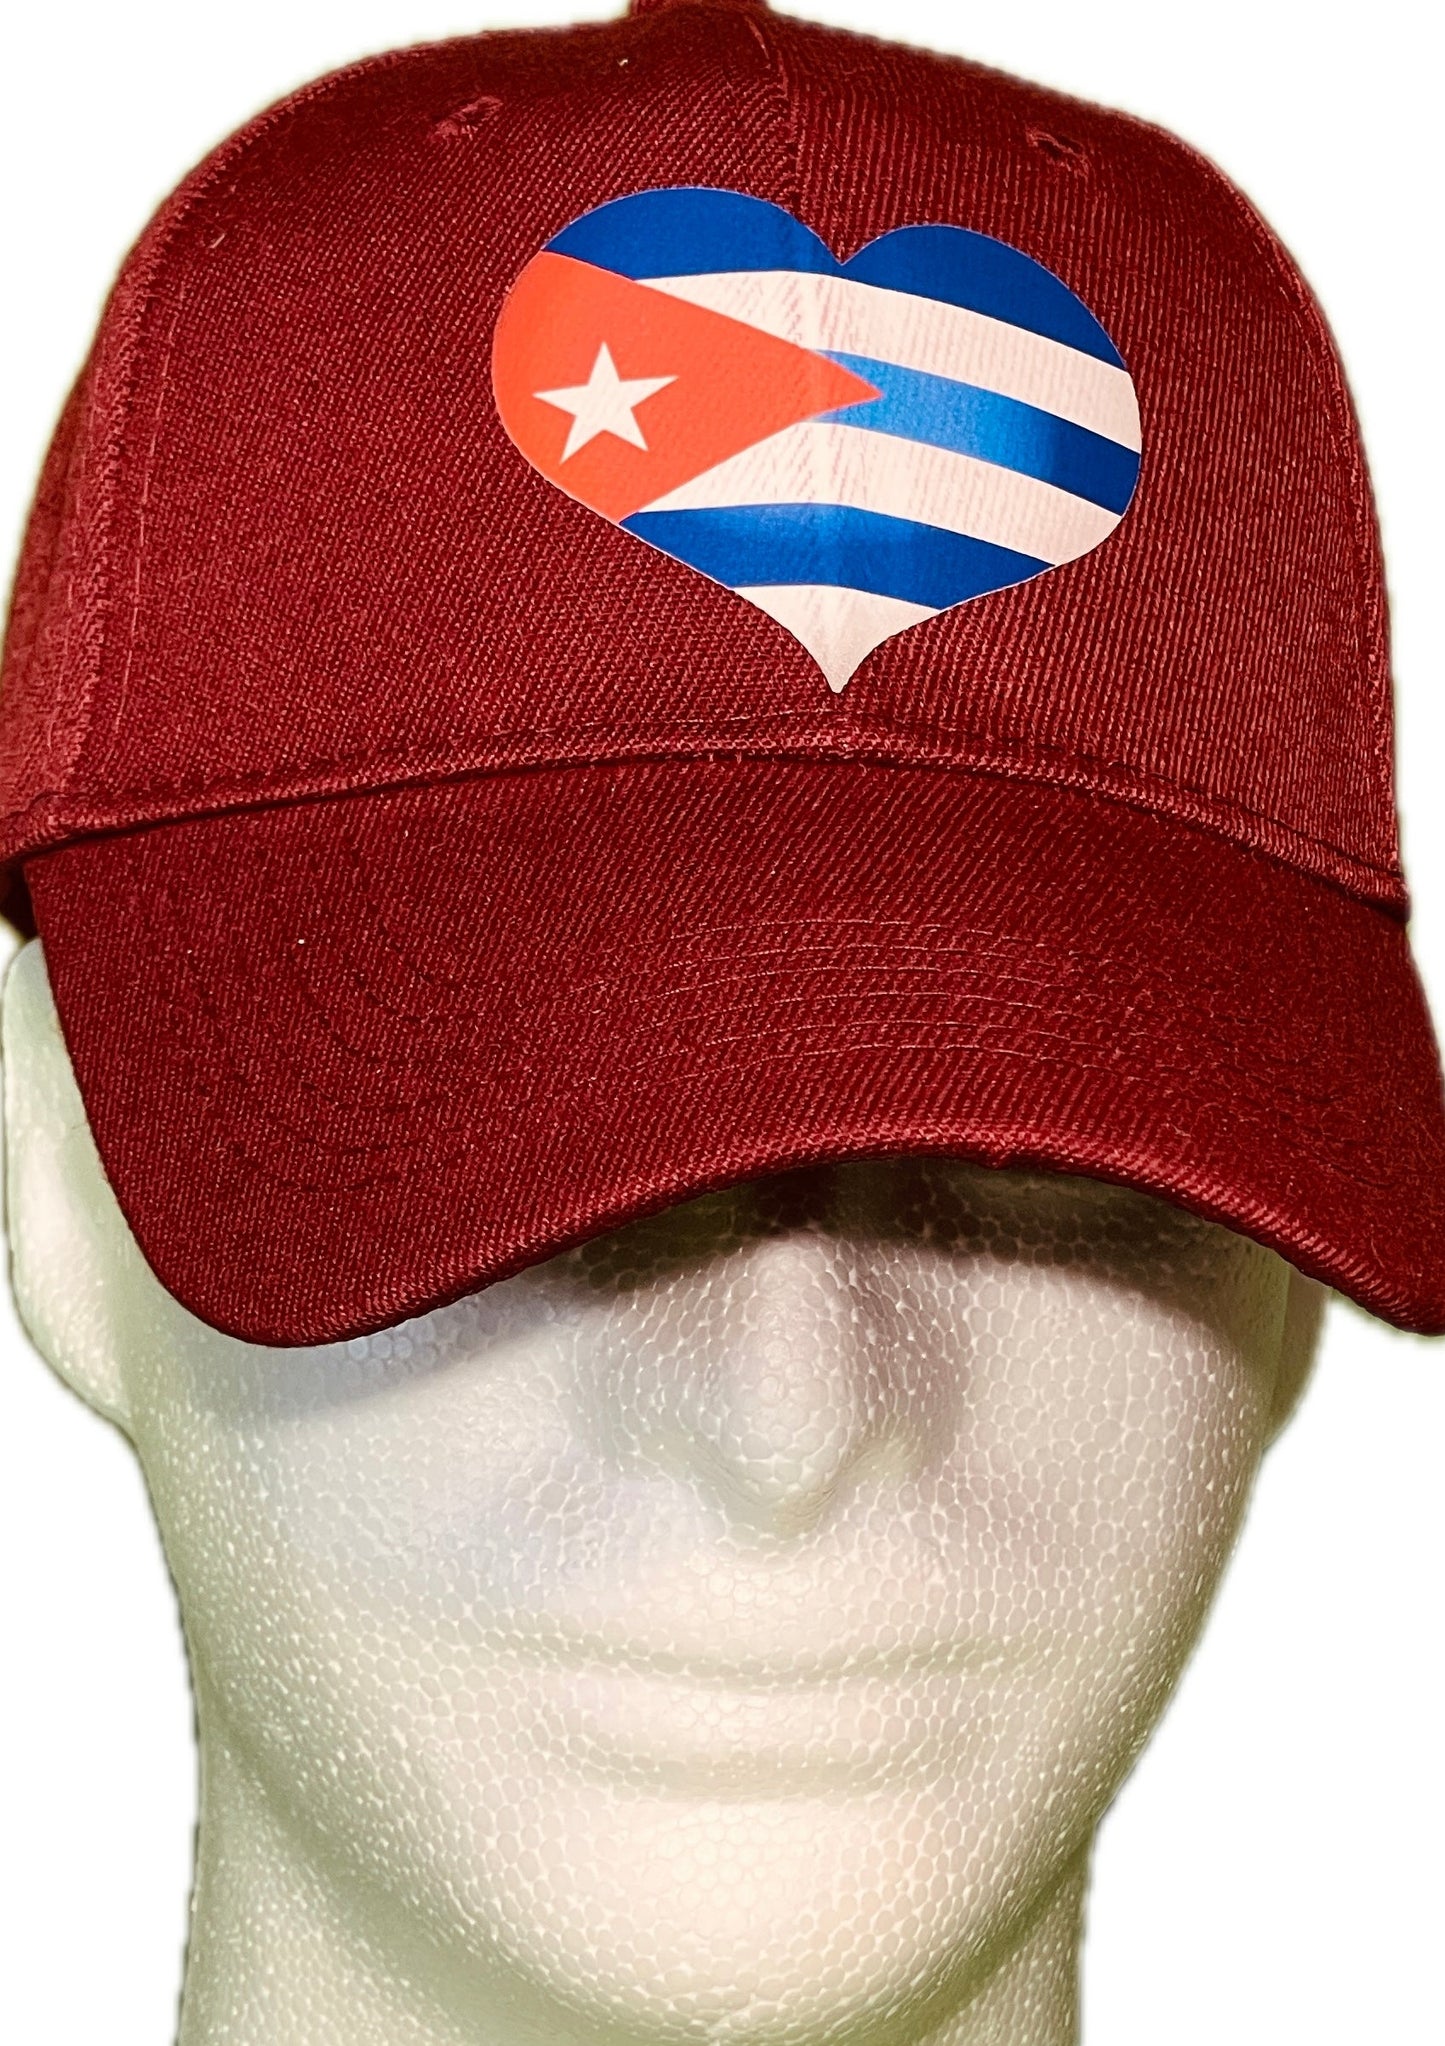 Burgundy "Heart Cuba" Baseball Cap